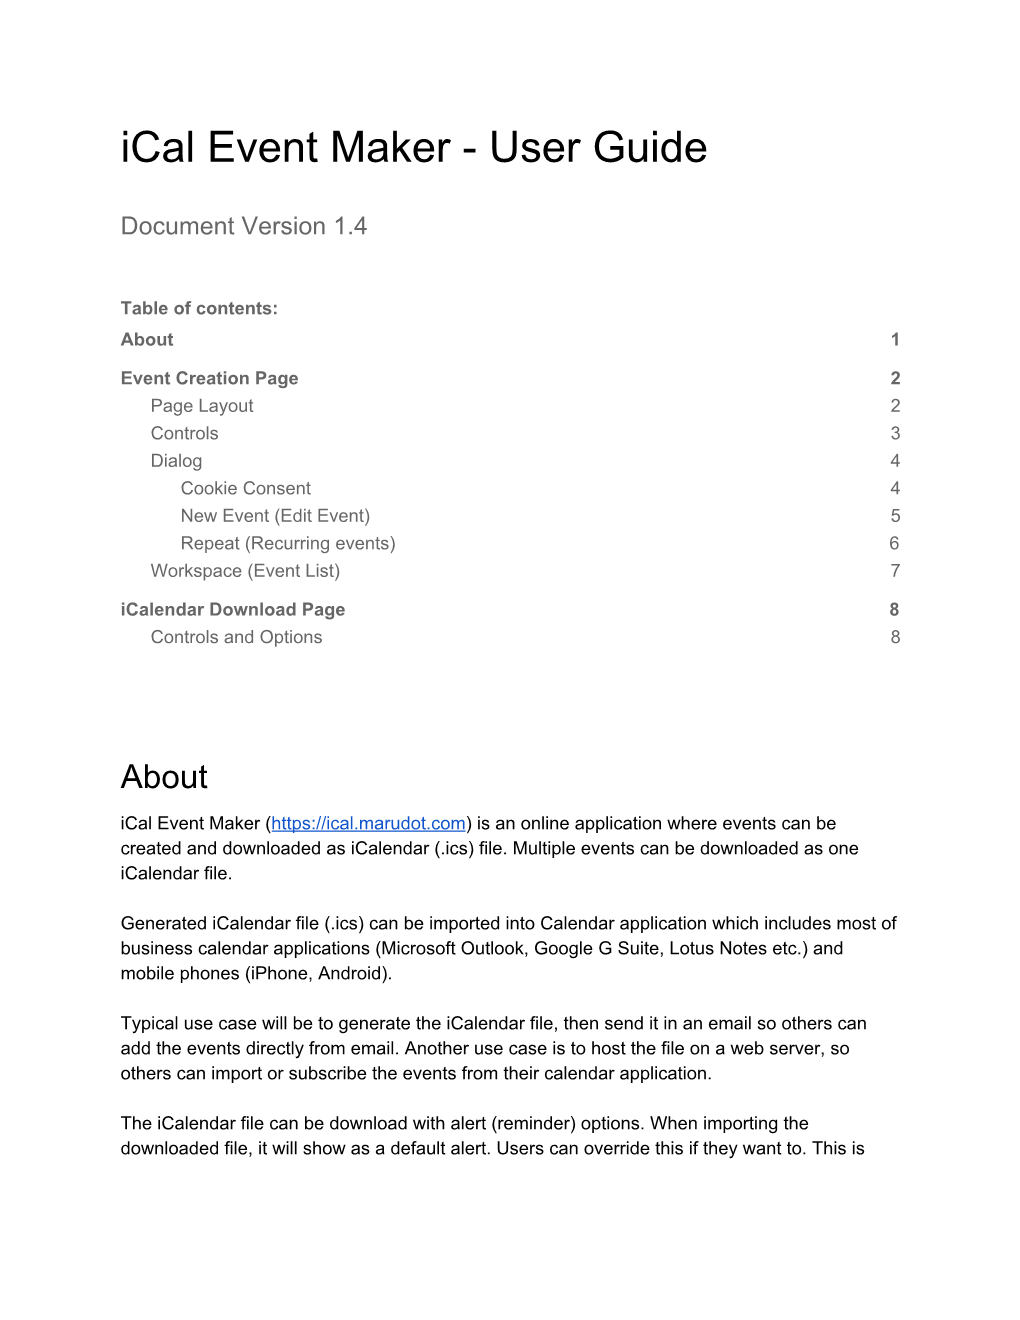 Ical Event Maker - User Guide